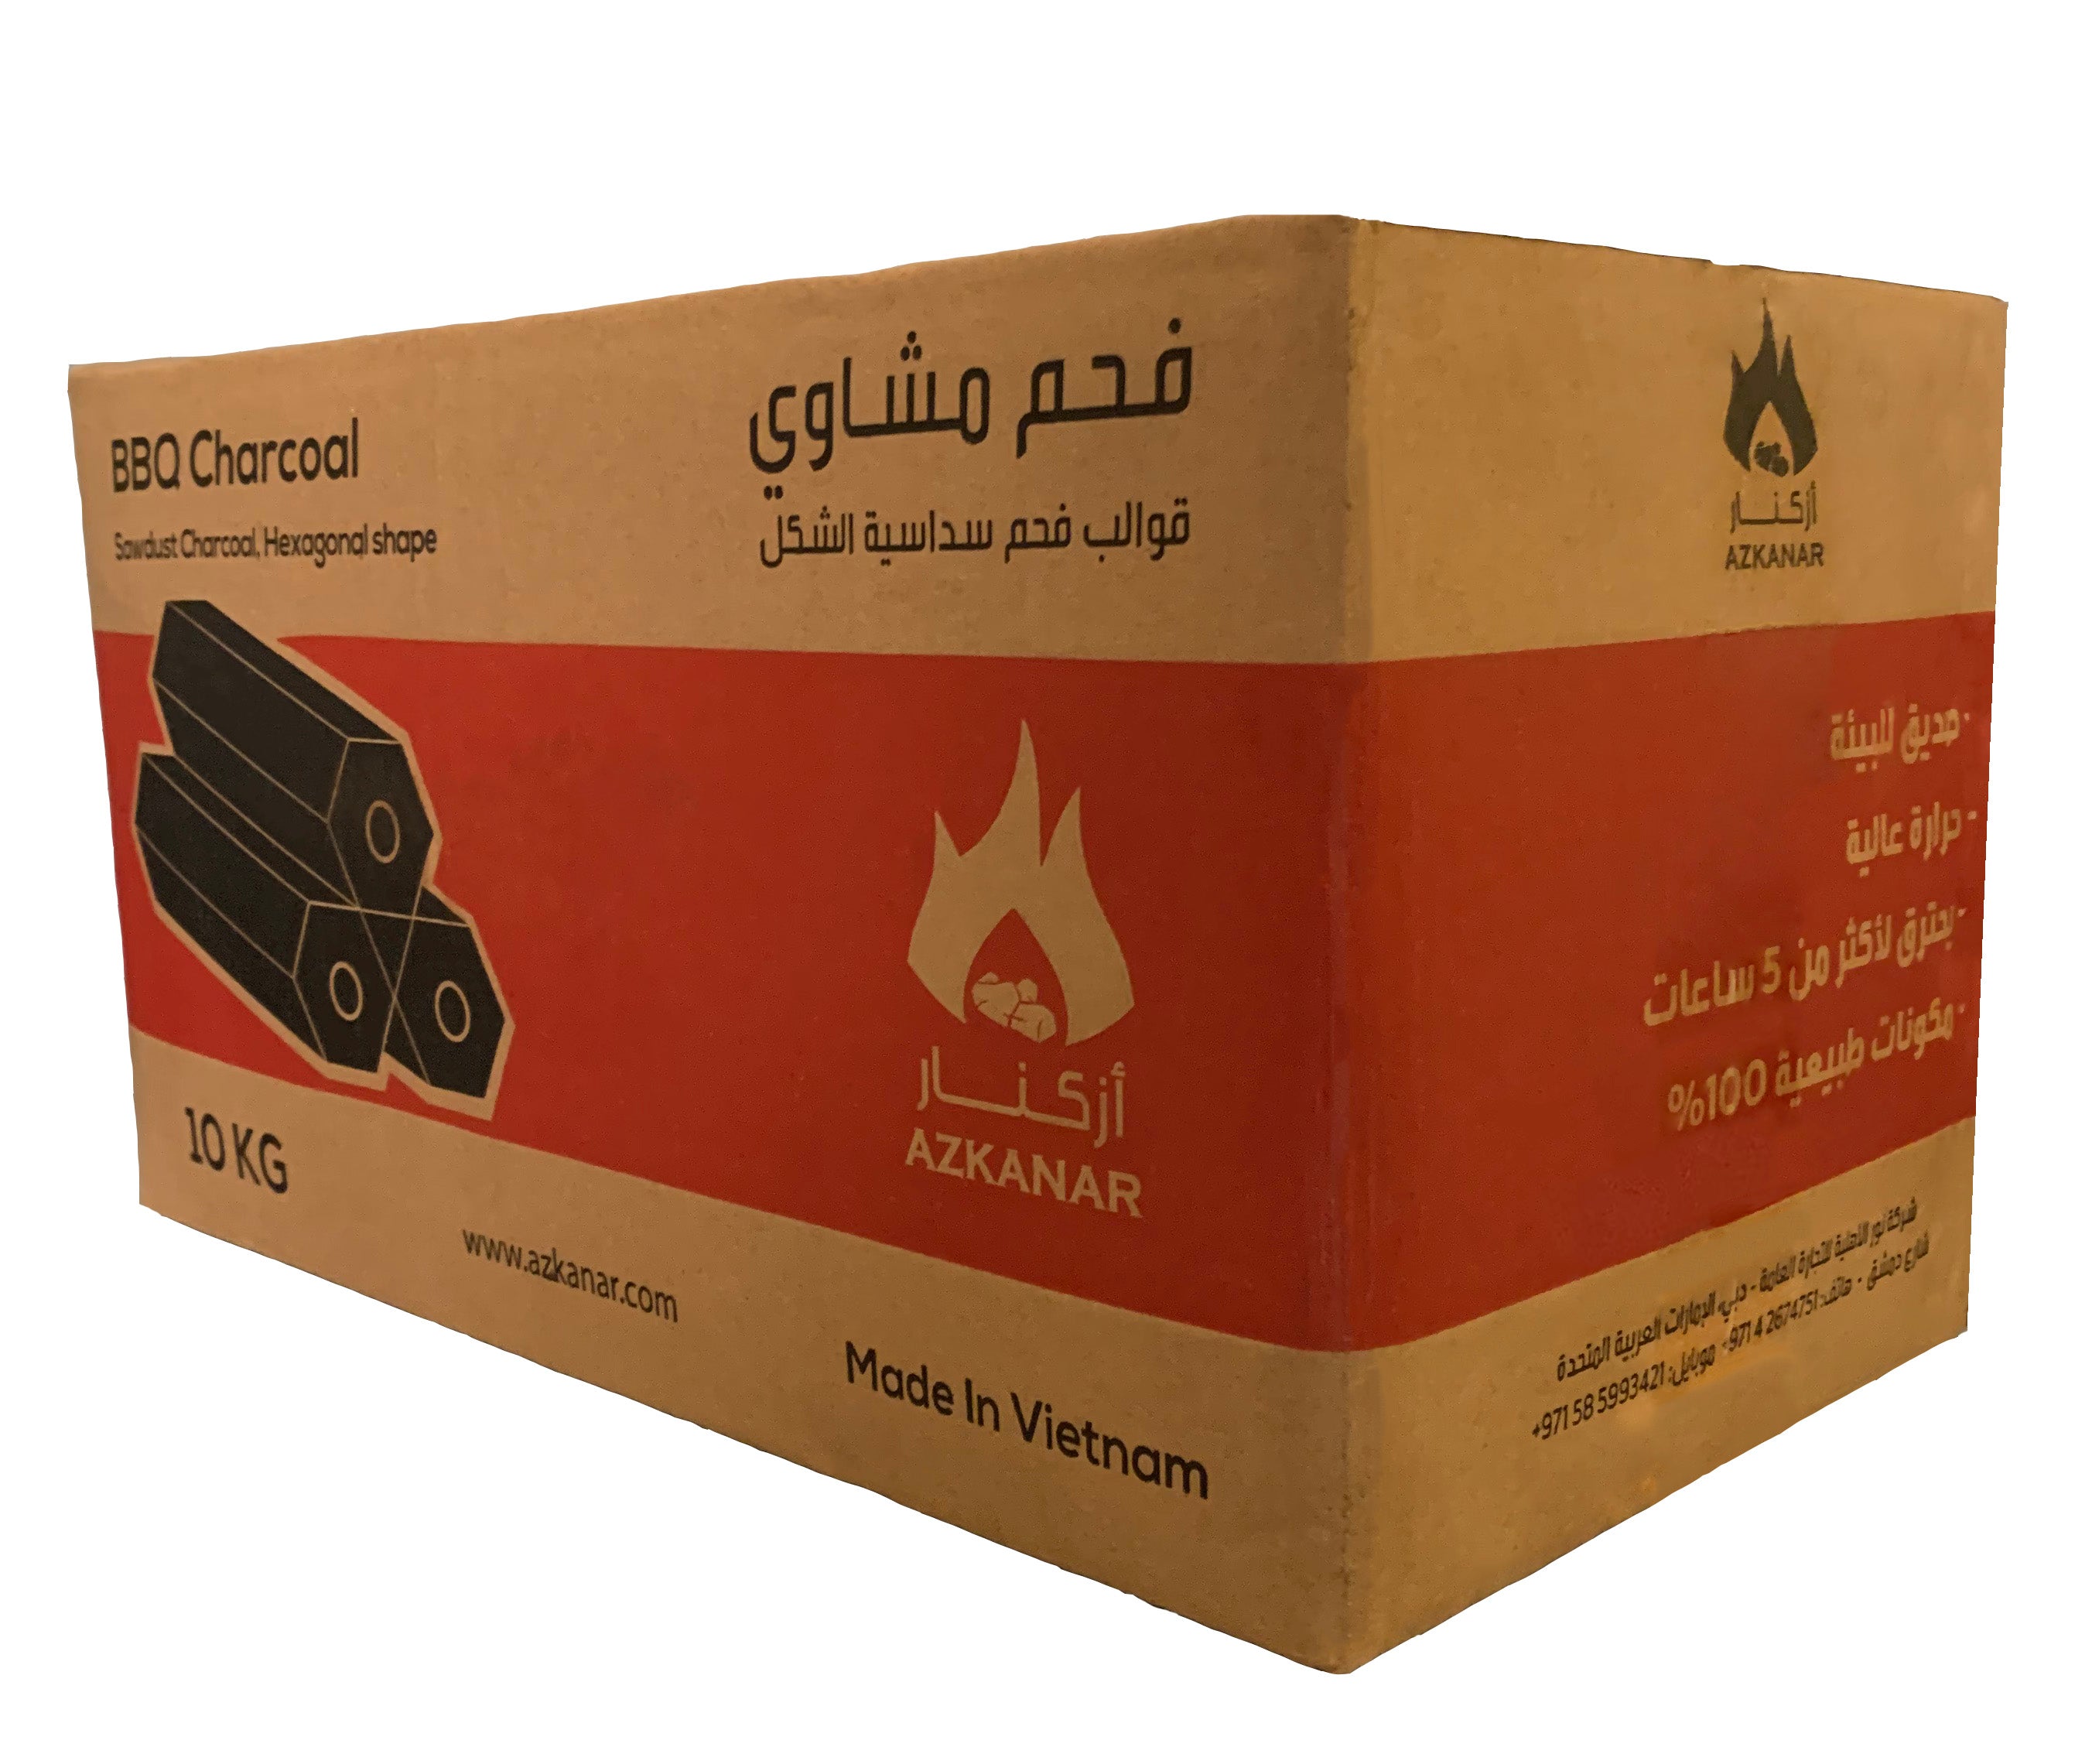 souffleur charbon barbecue manuel – X10 Maroc